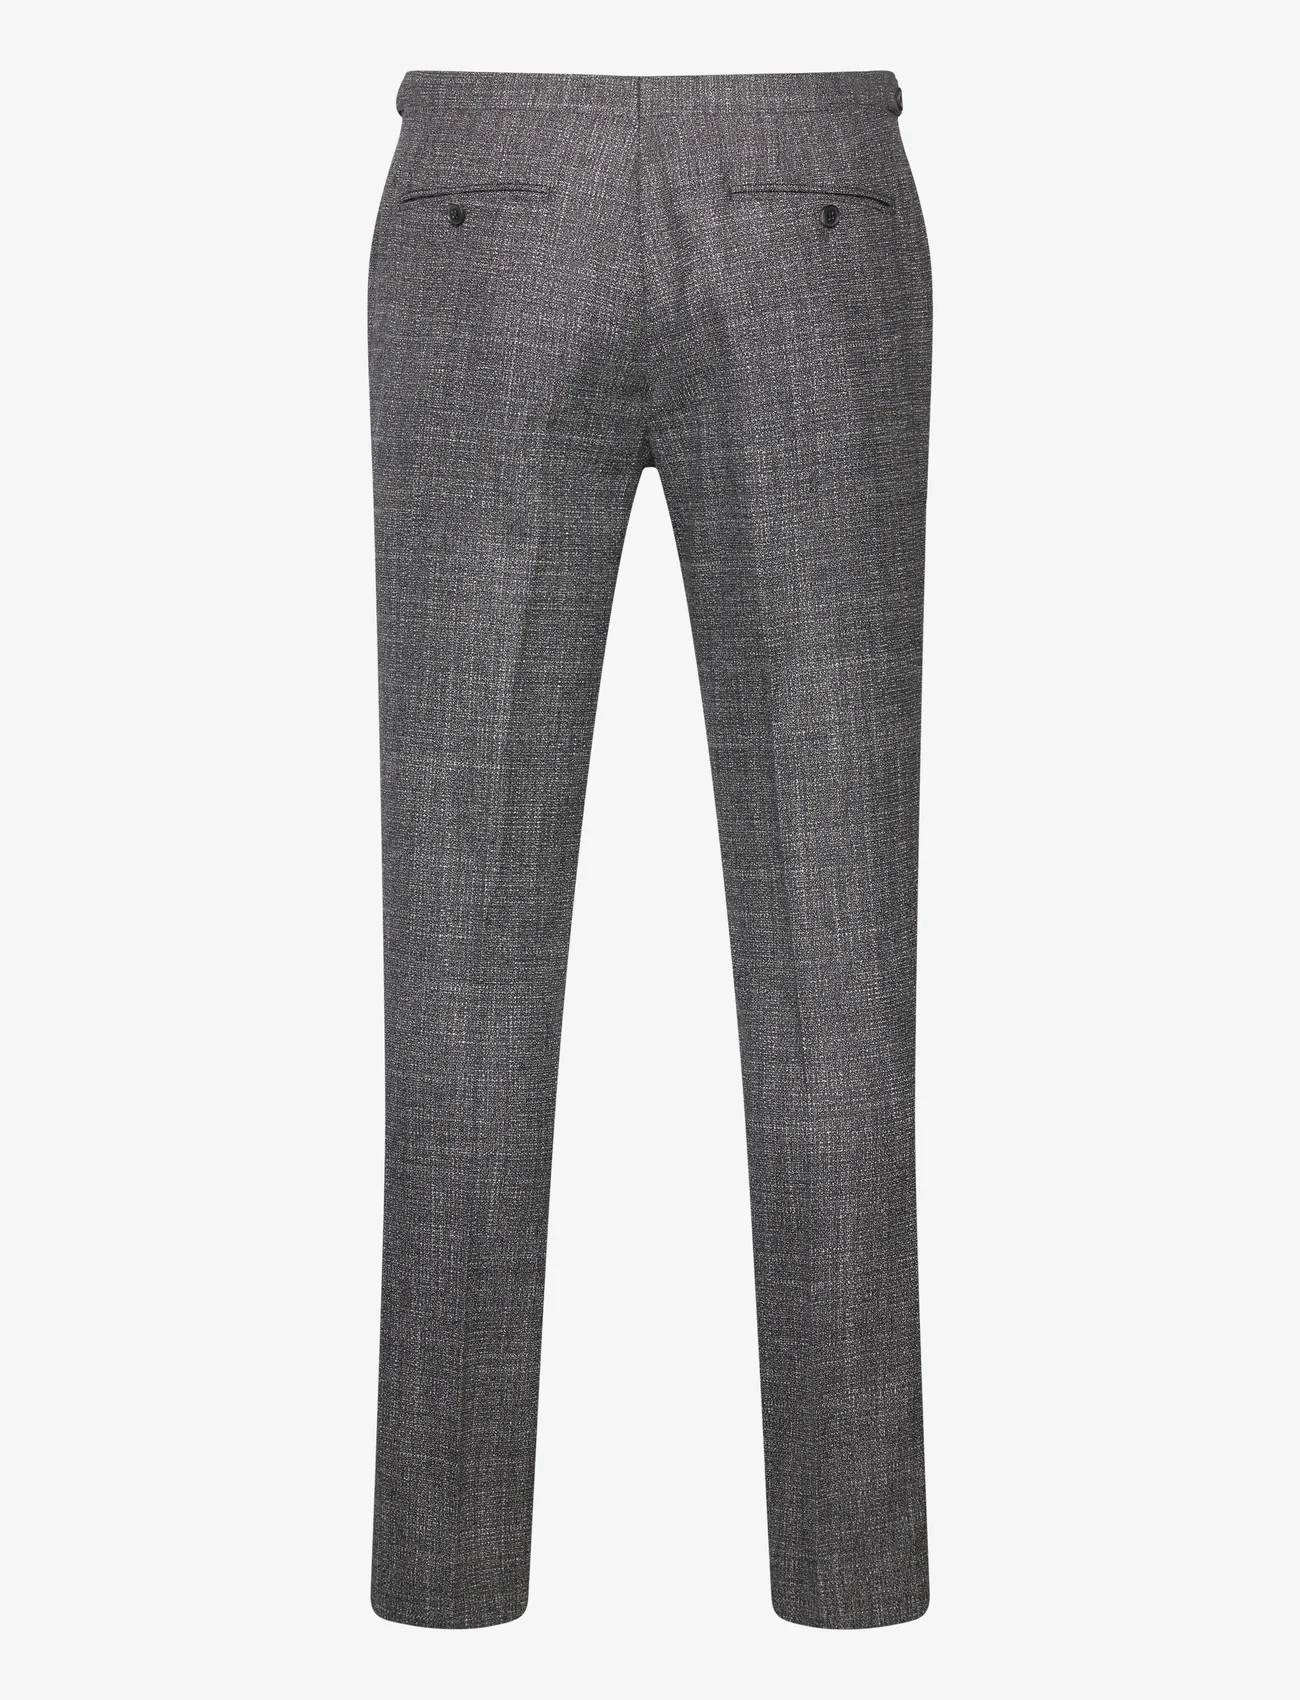 Reiss - CROUPIER - suit trousers - charcoal - 1